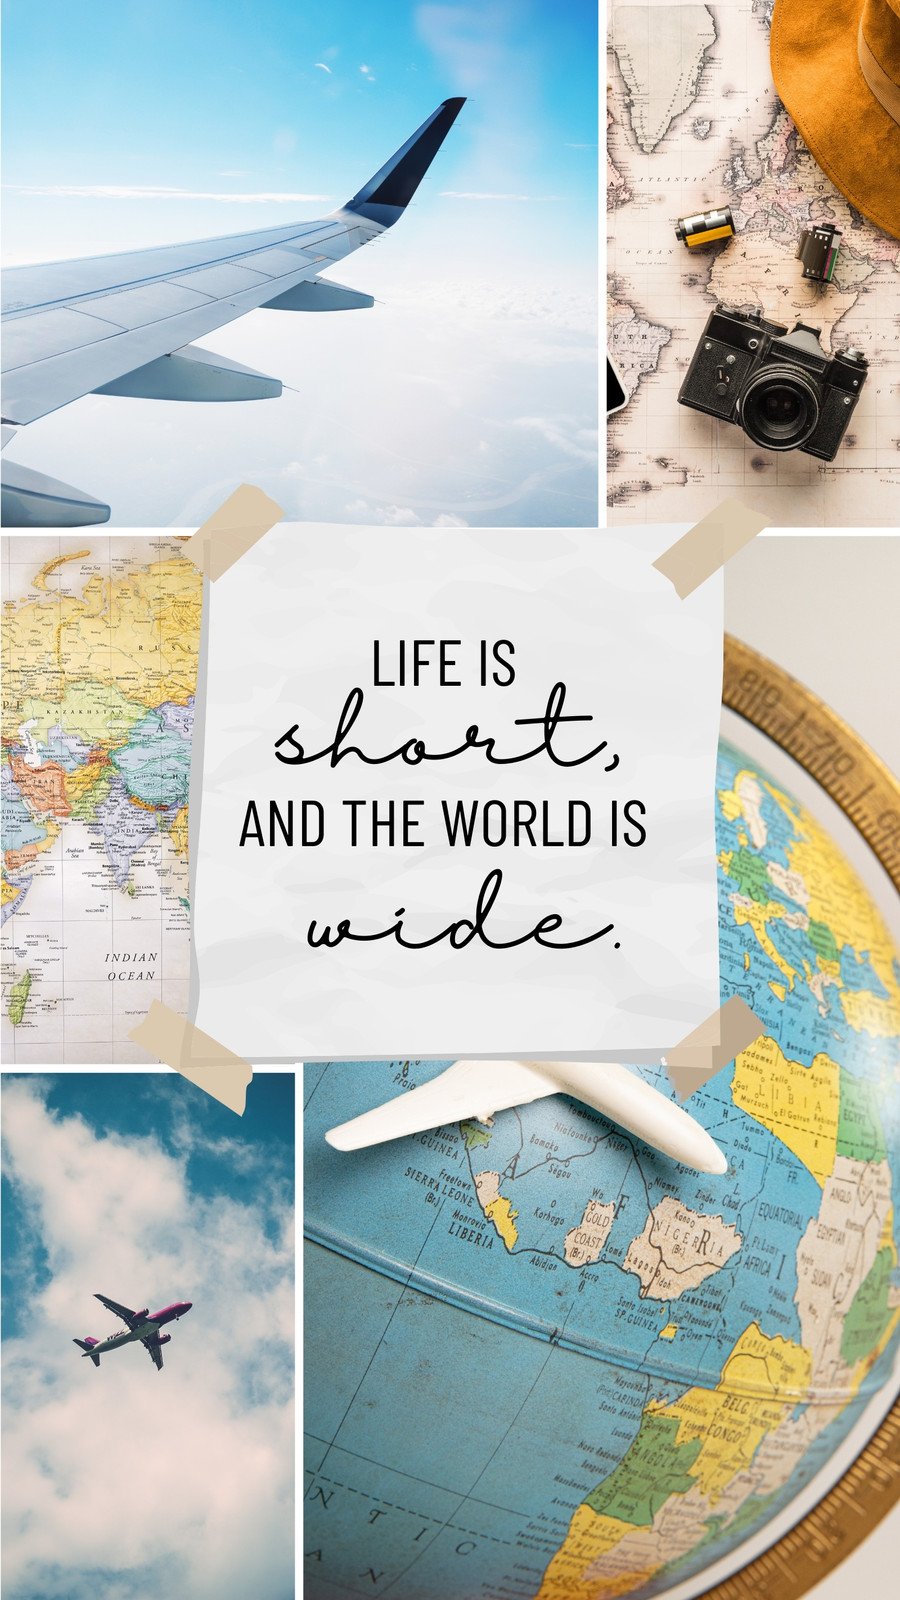 200 Story Sticker Instagram Travel Holiday Vacation Digital Download Daily  Urlaub 